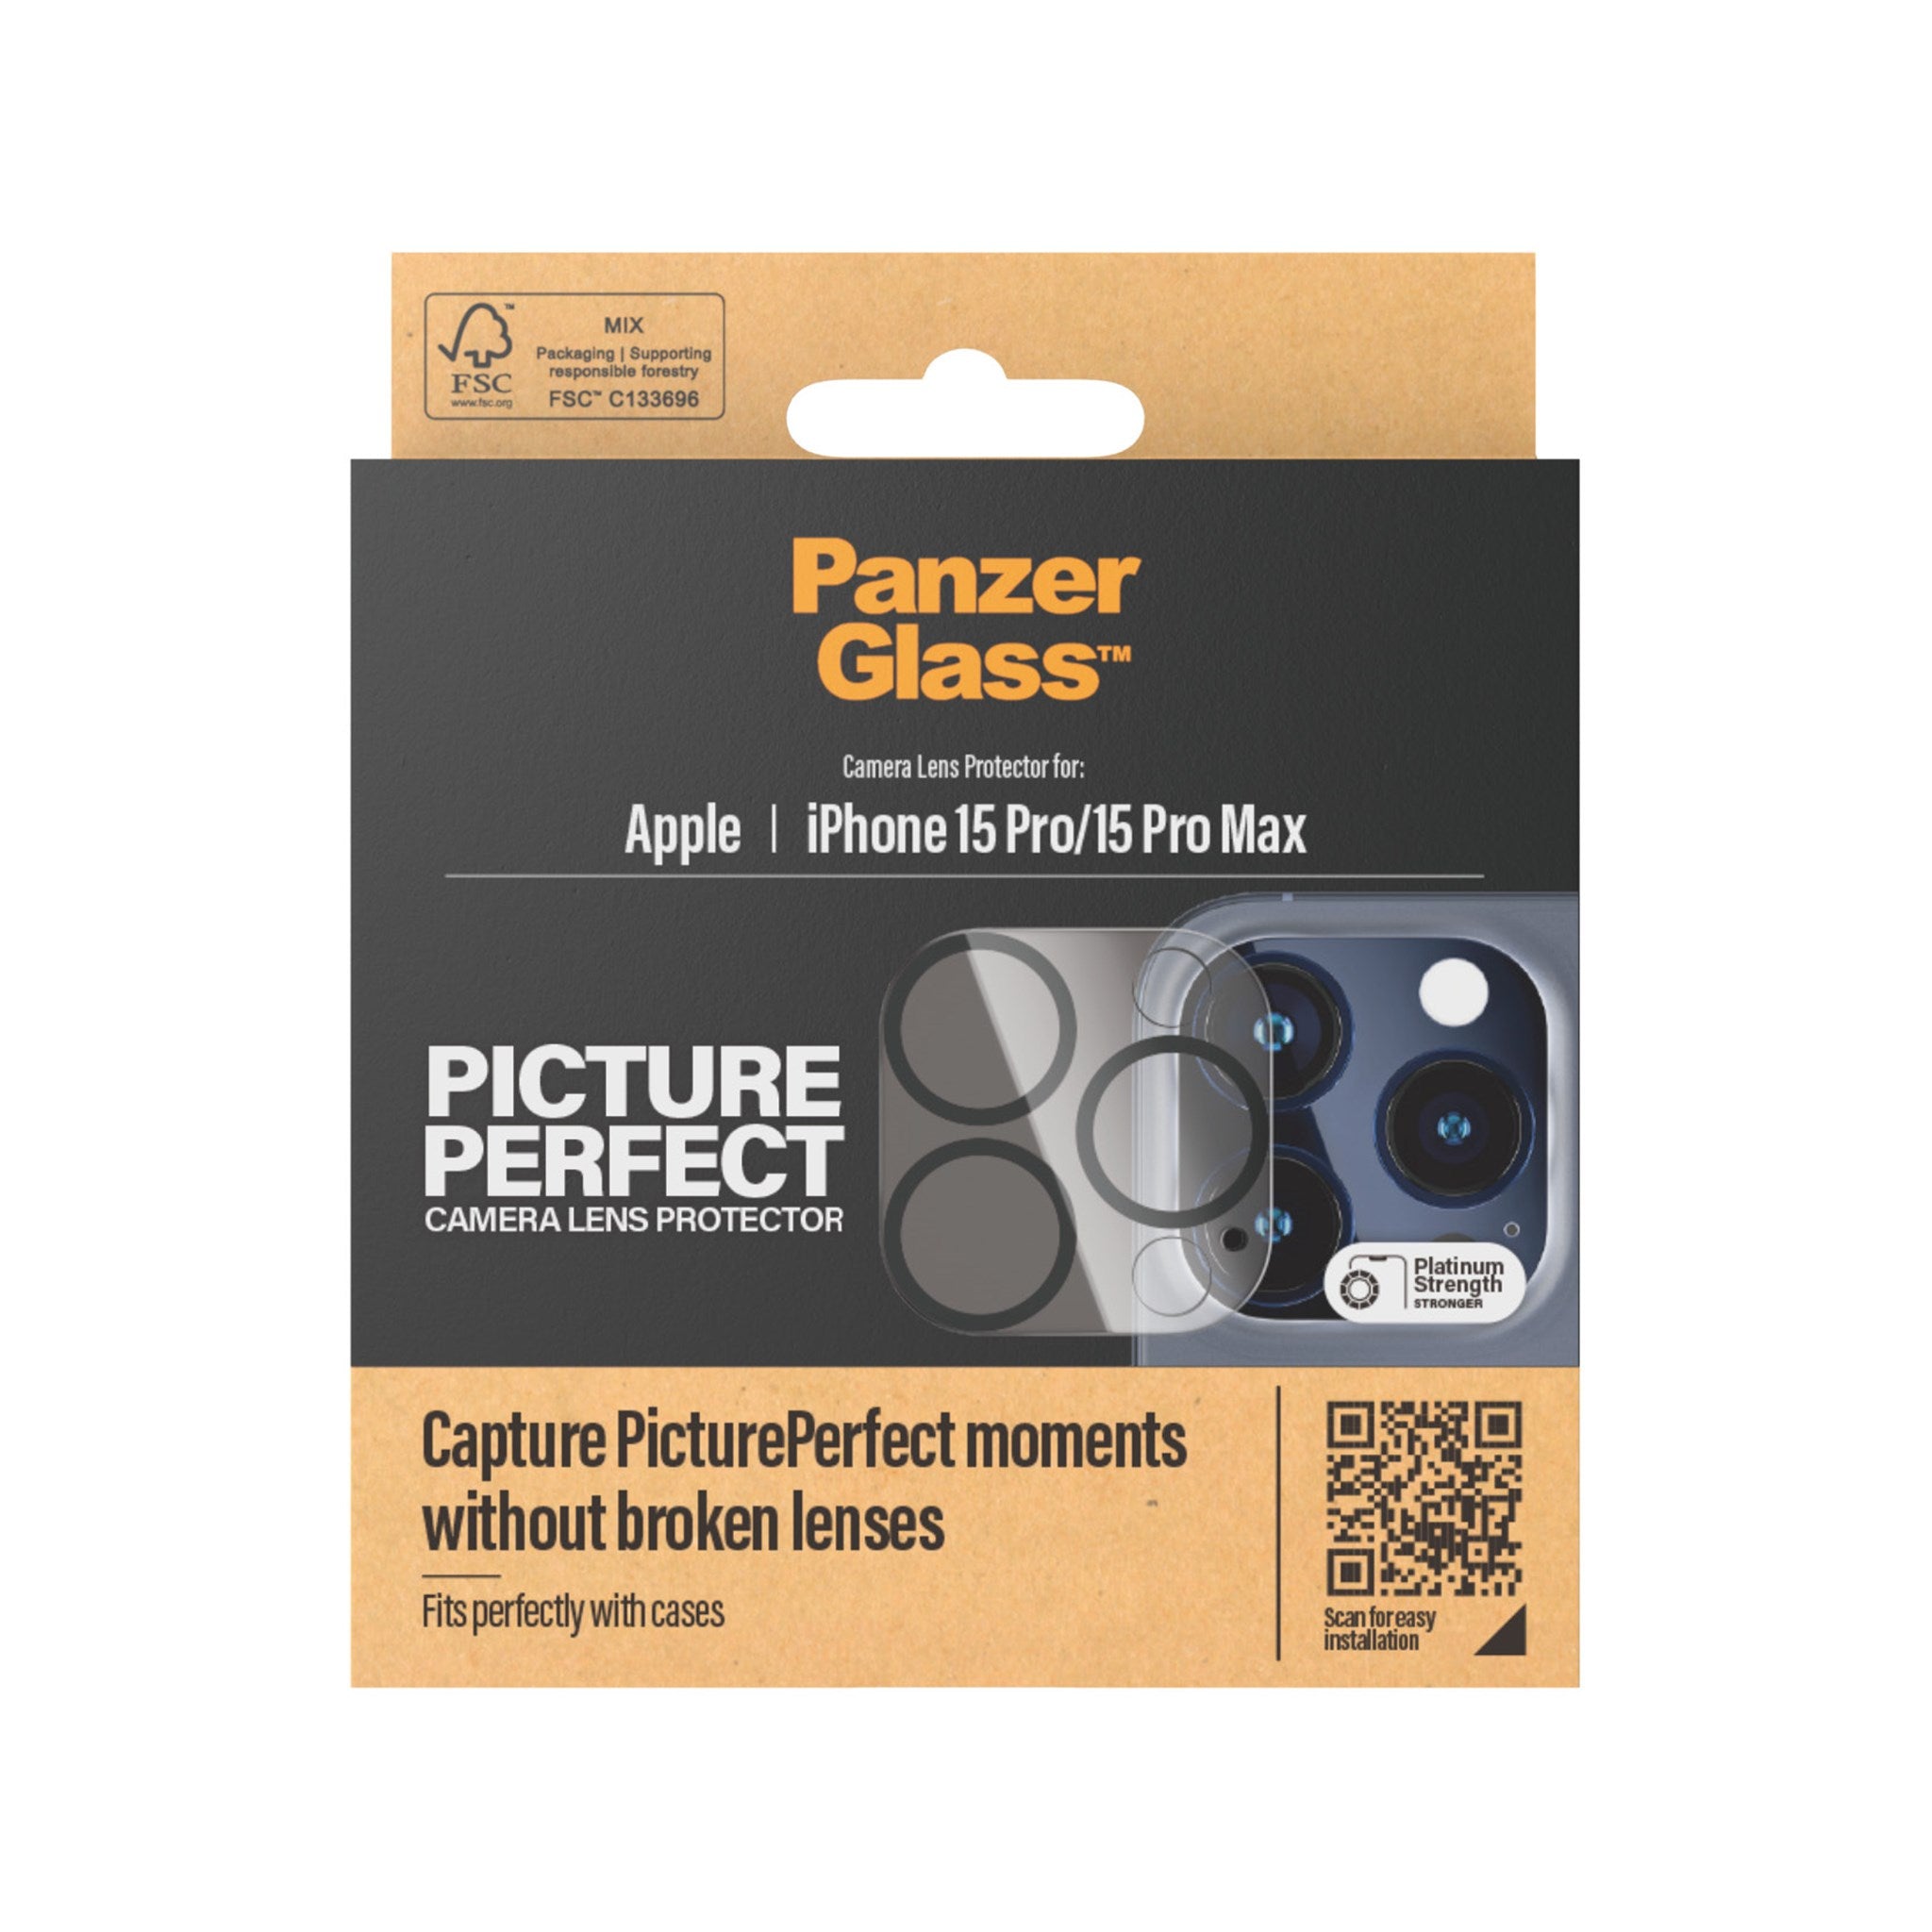 Comprar PanzerGlass PicturePerfect Protector lentes cámara iPhone 14 Pro y  14 Pro Max 400